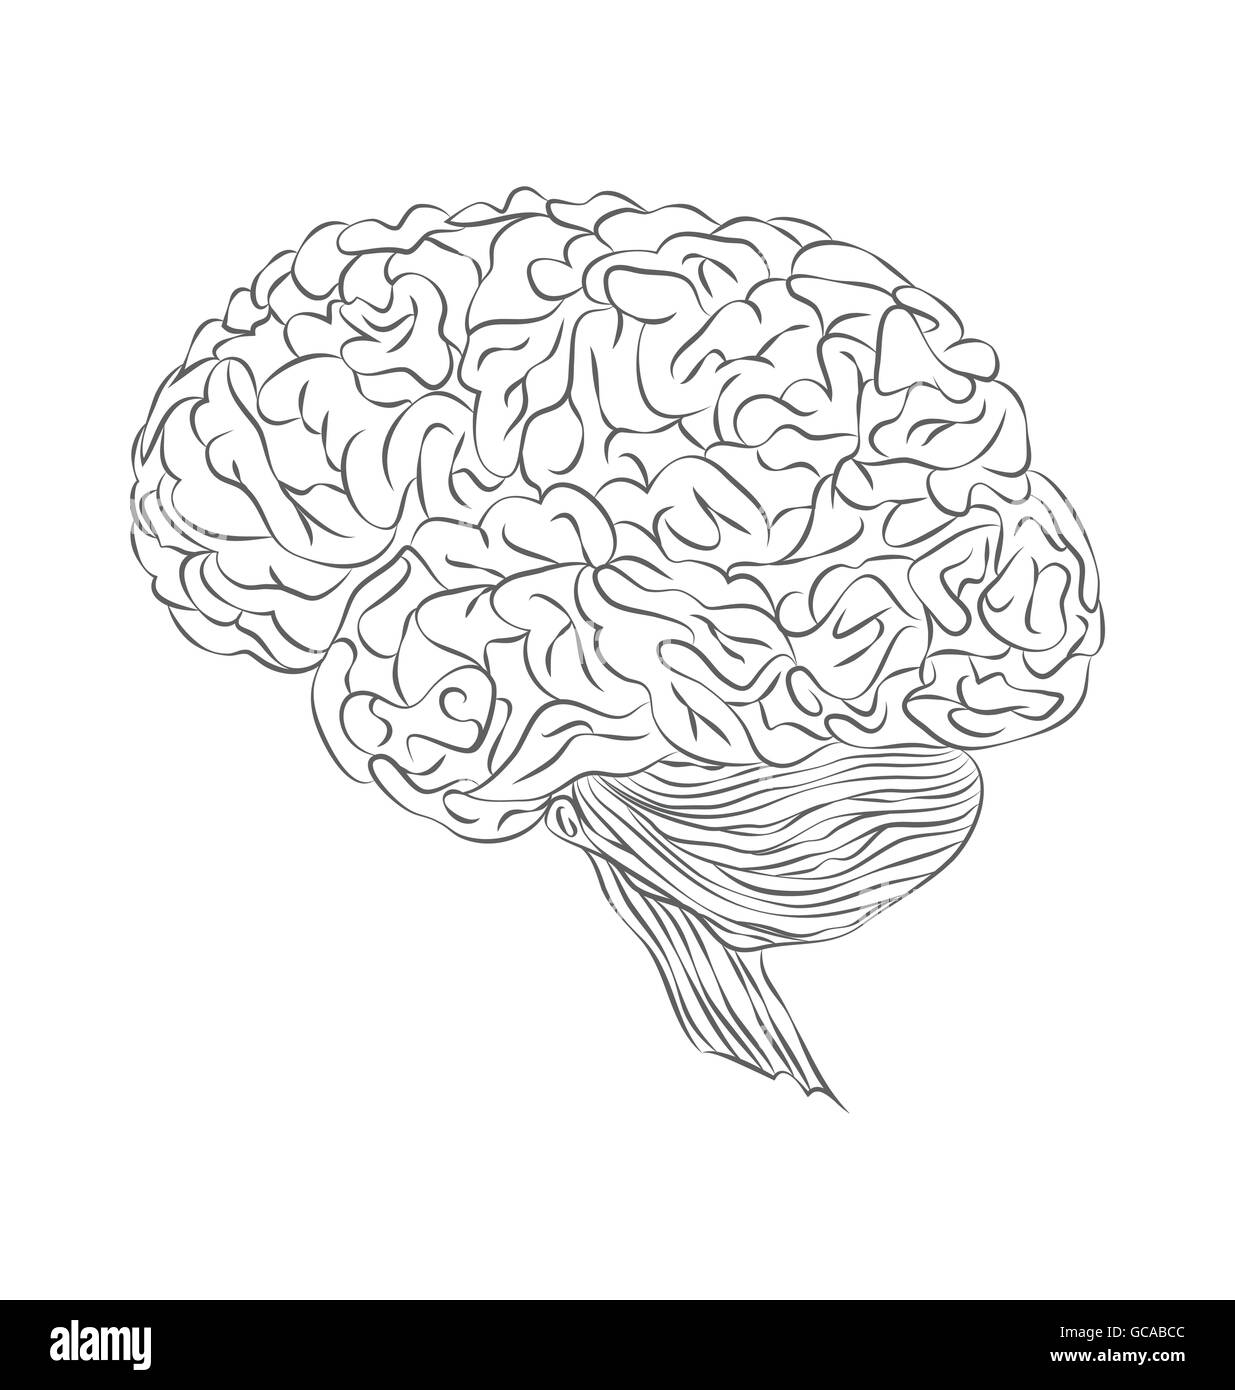 Human brain. Single flat icon. Side view Stock Vector